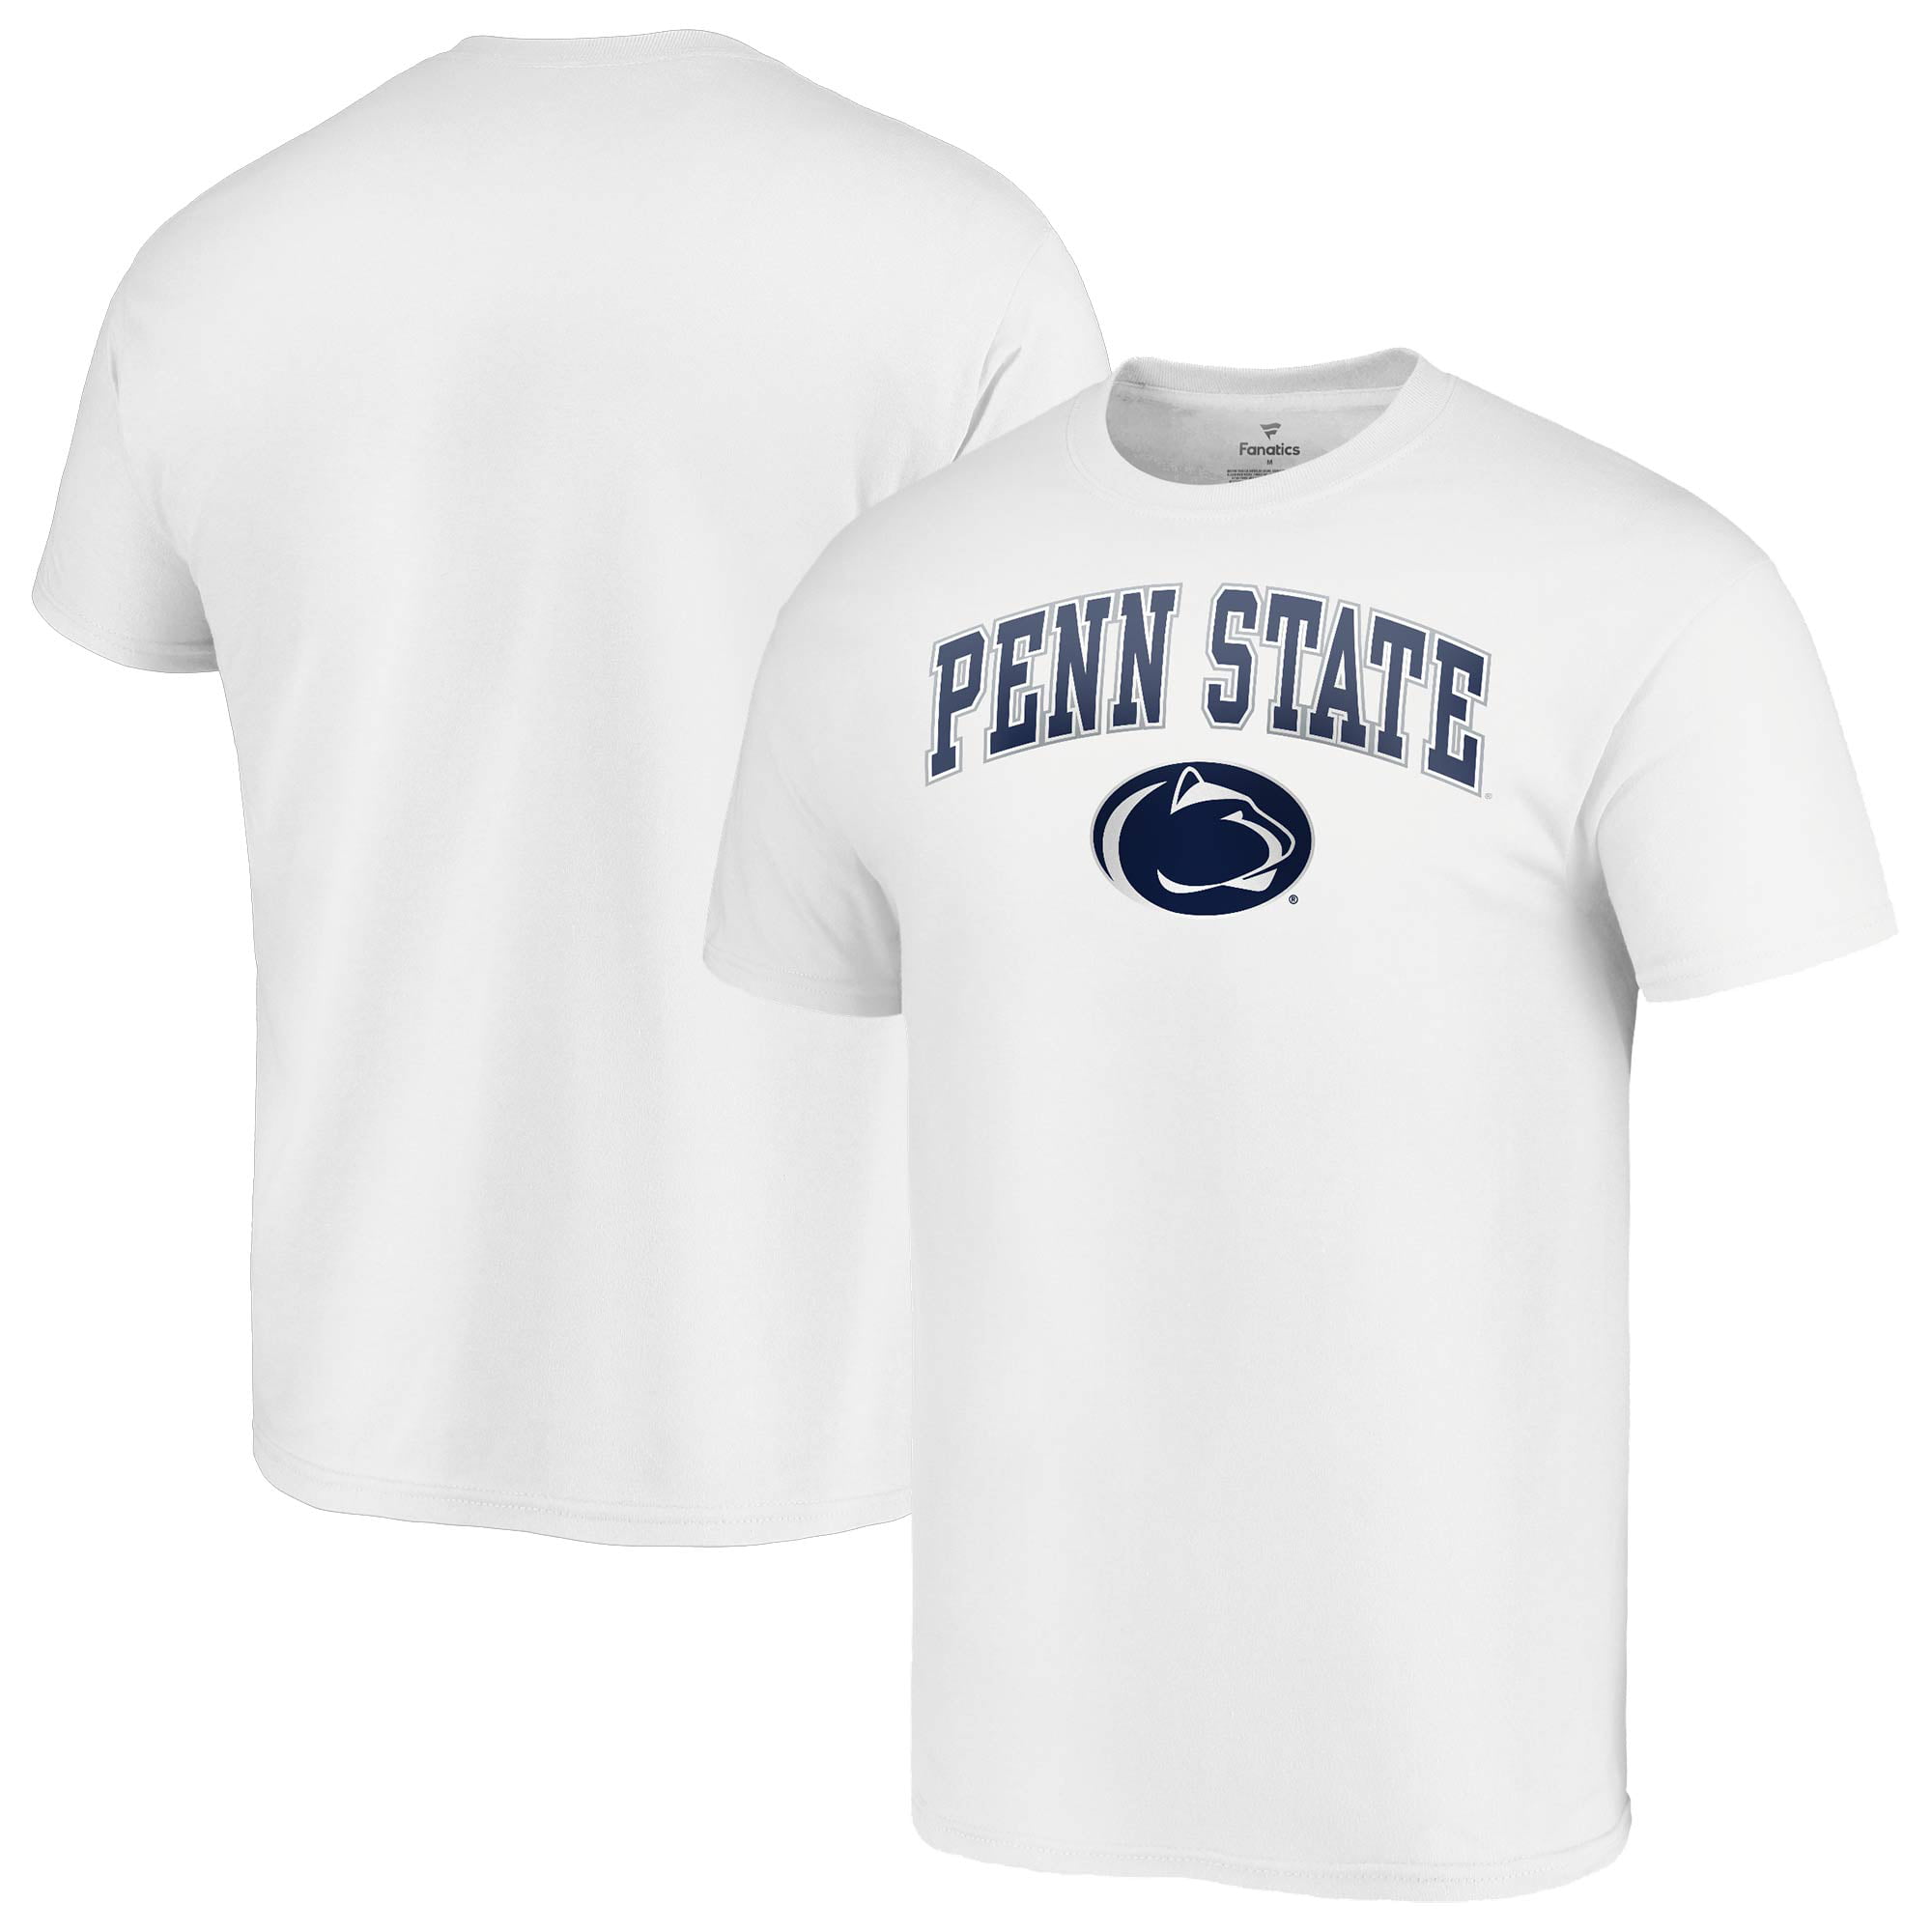 penn state white out shirt 2021